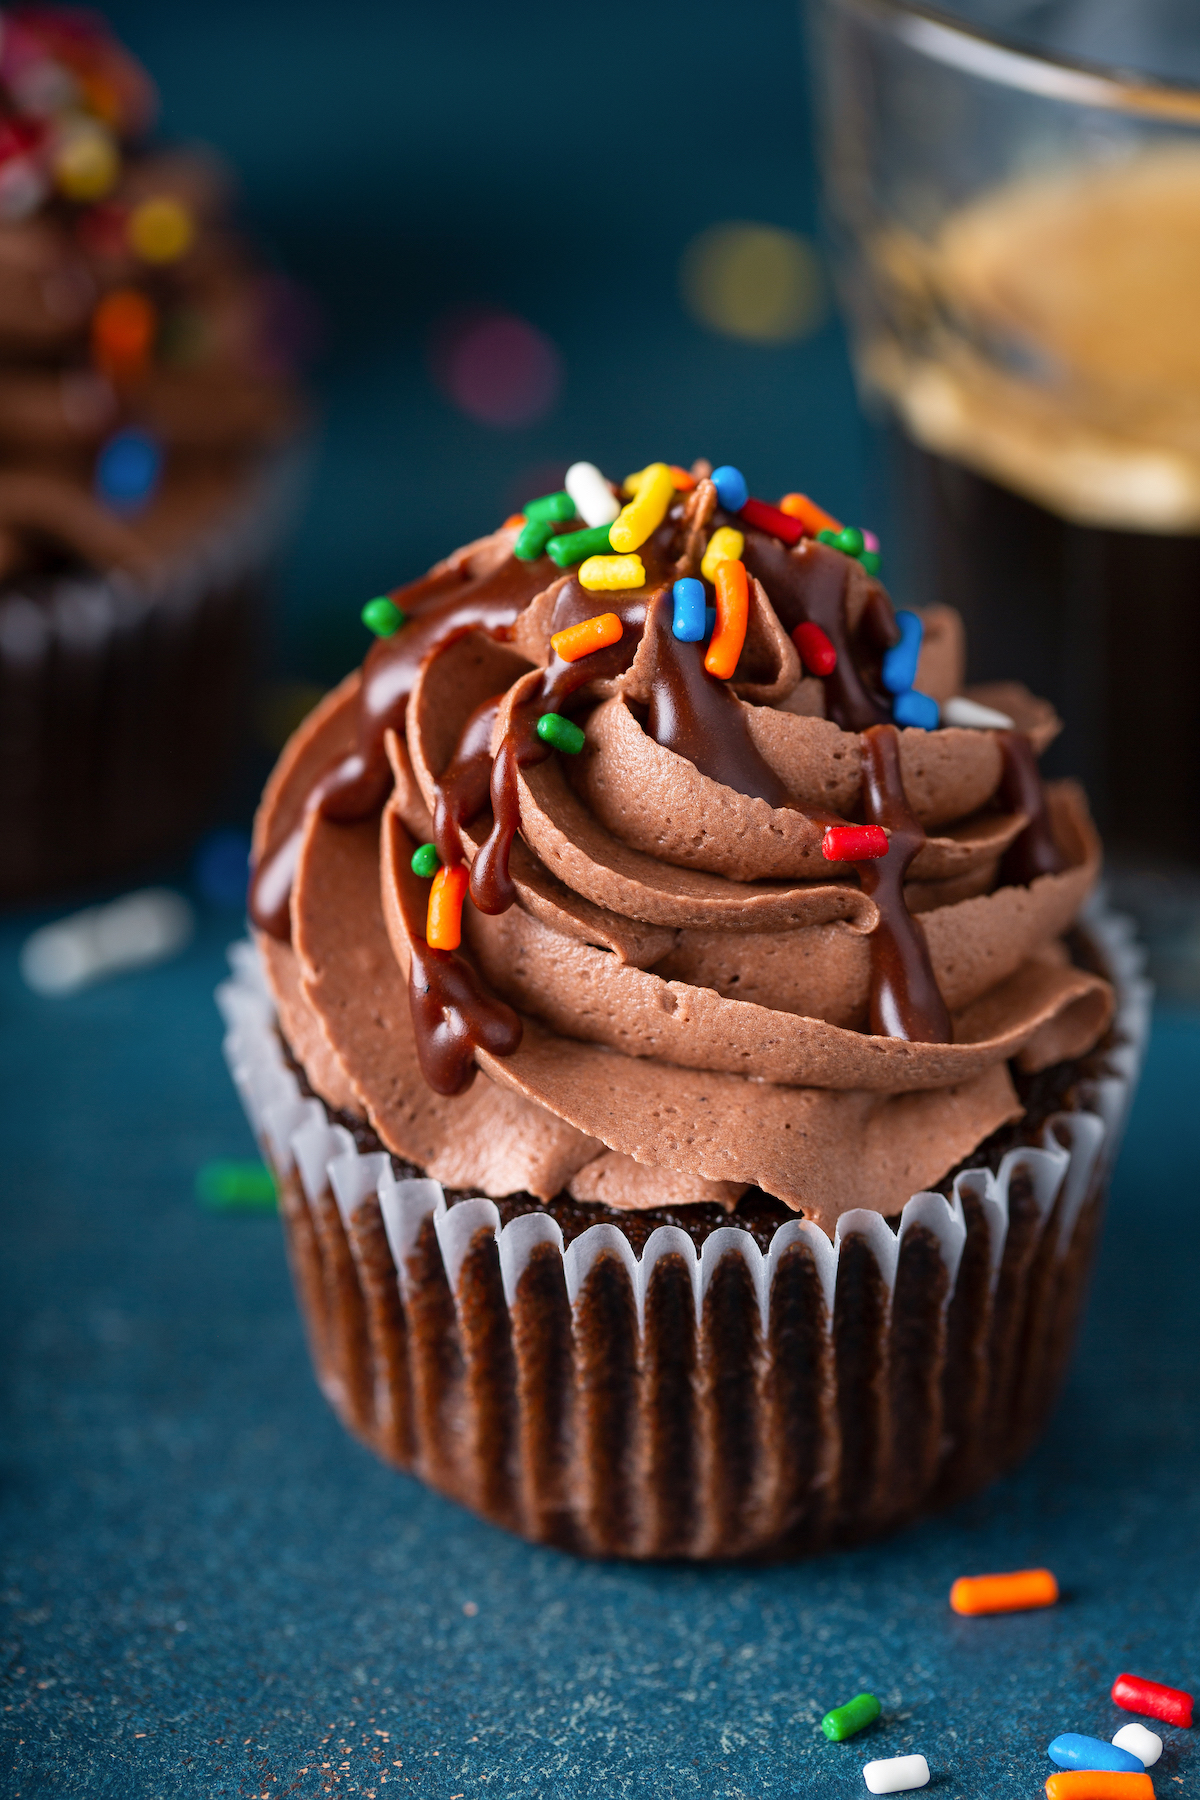 Homemade chocolate cupcakes on a dark blue background, with rainbow sprinkles.